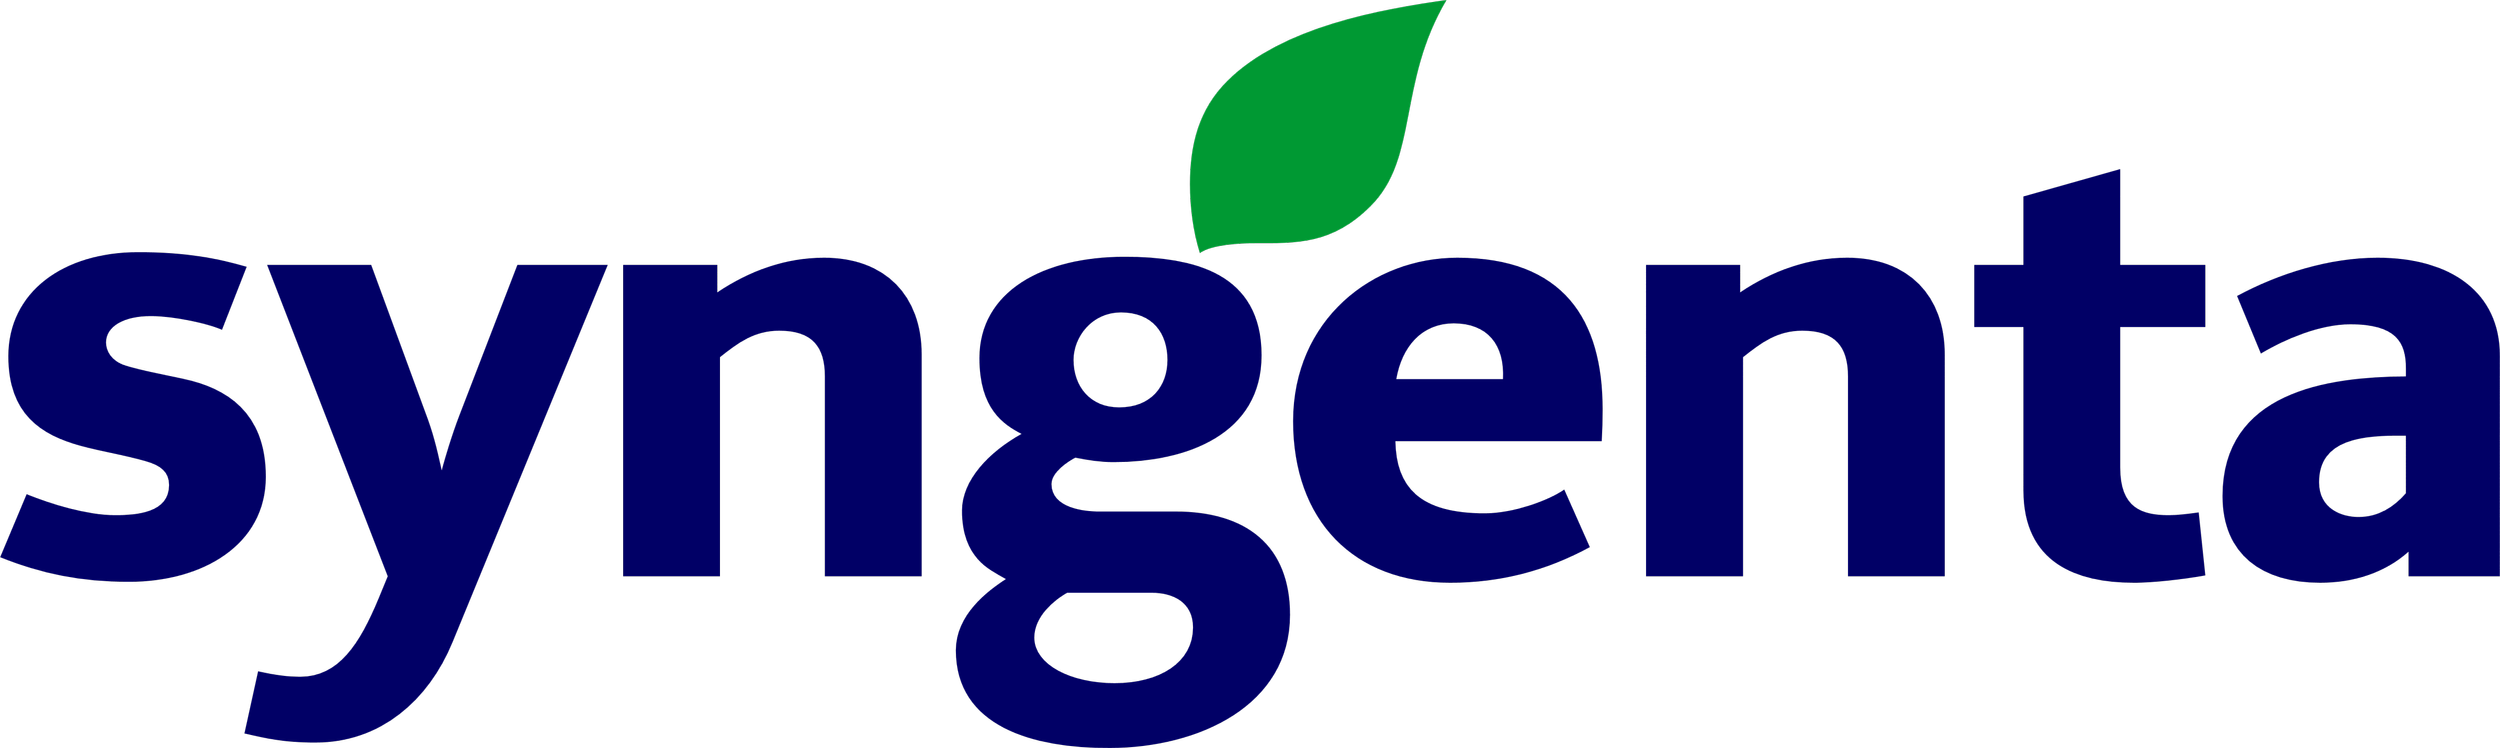 Syngenta-logo-rectangle.png